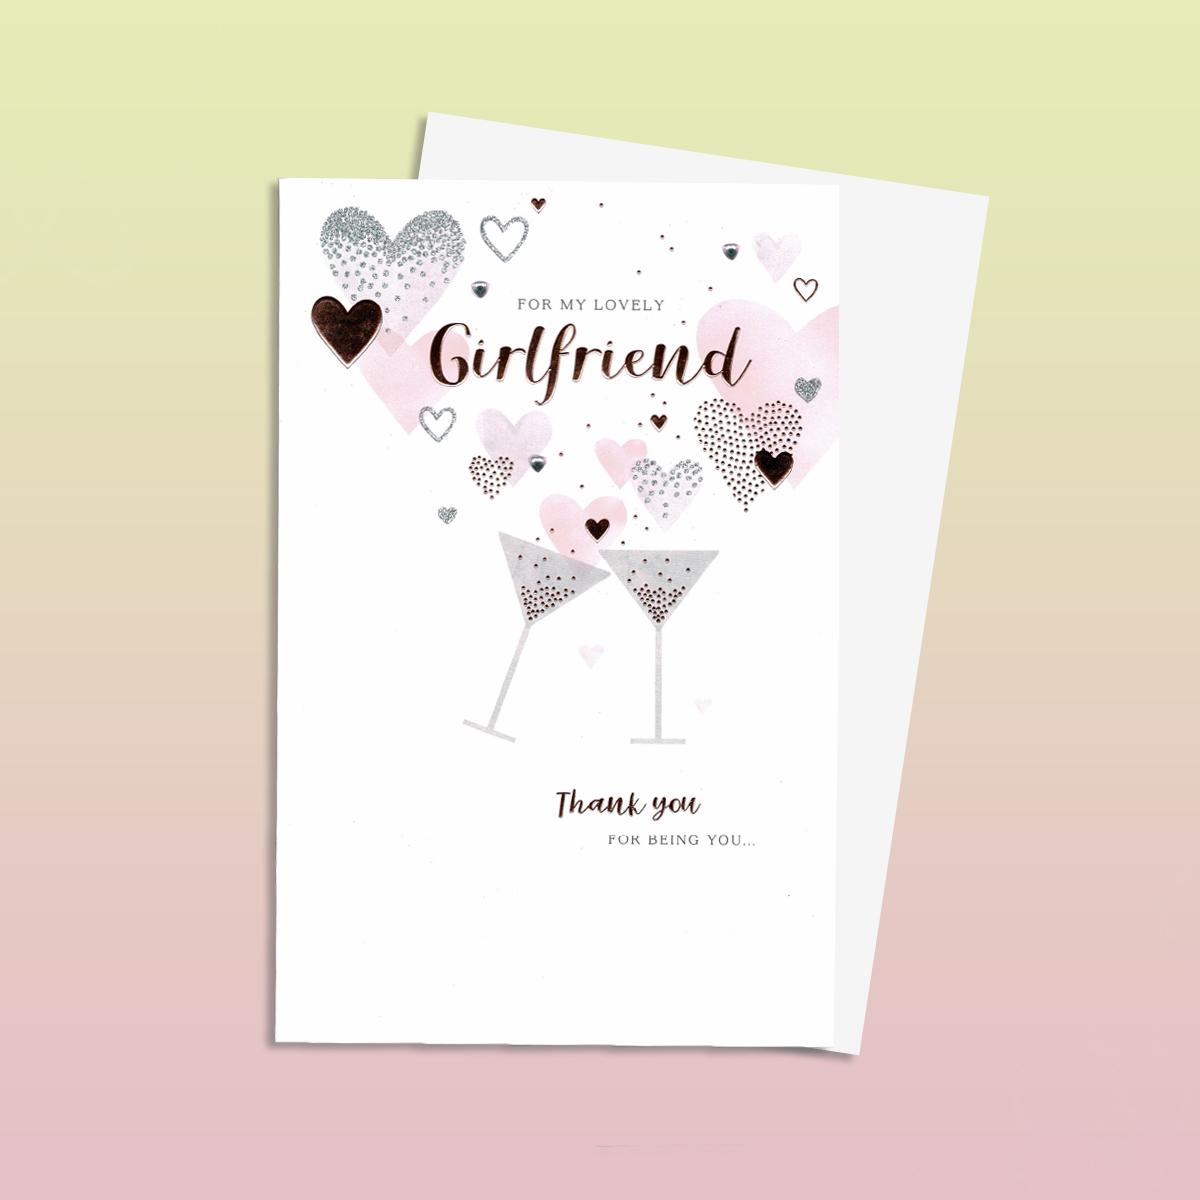 Girlfriend Martini Birthday Card Alongside Its White Envelope